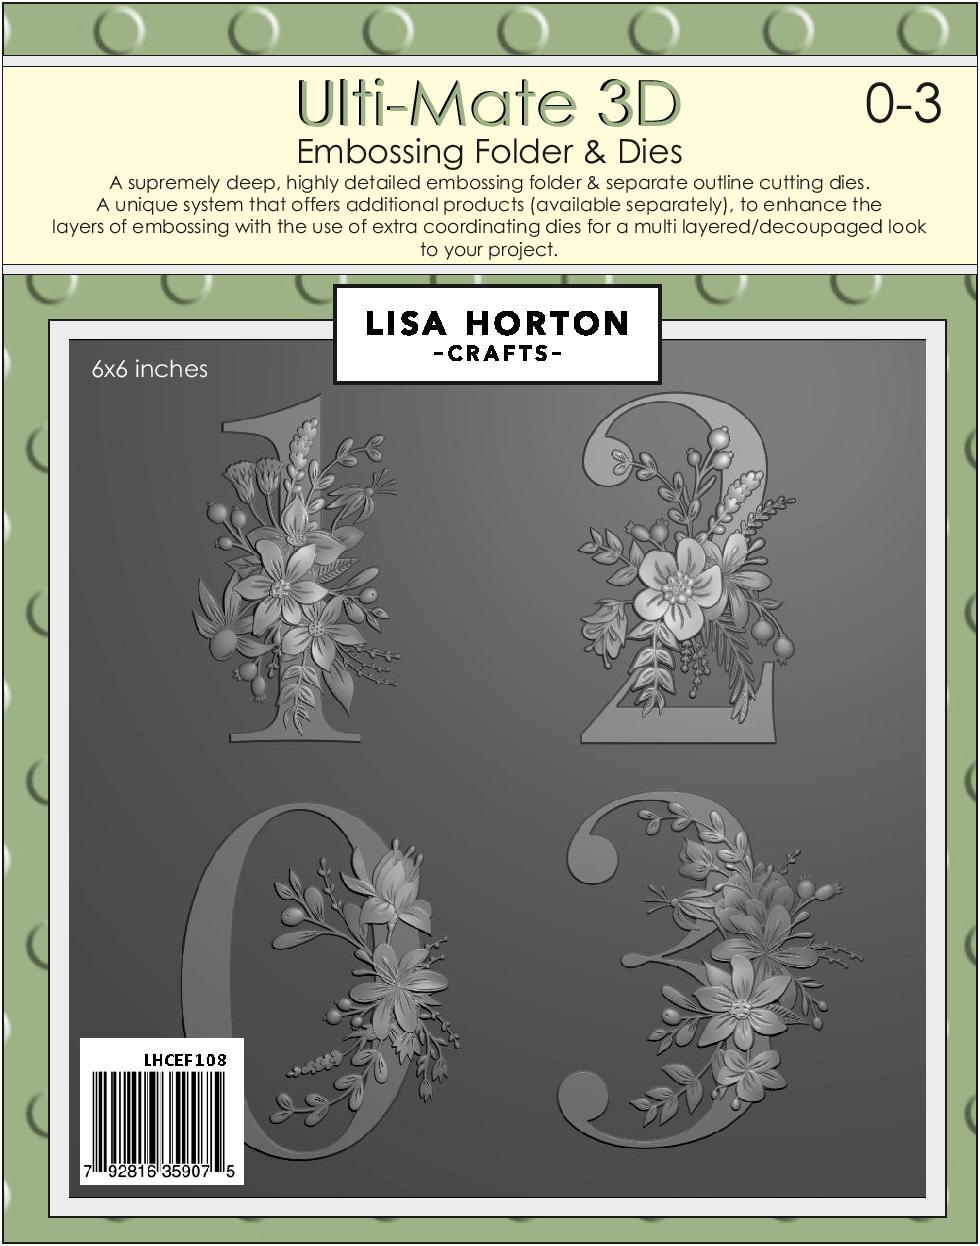 Lisa Horton Crafts Ulti-Mate 3D 6x6 3D Embossing Folder & Dies 0-3